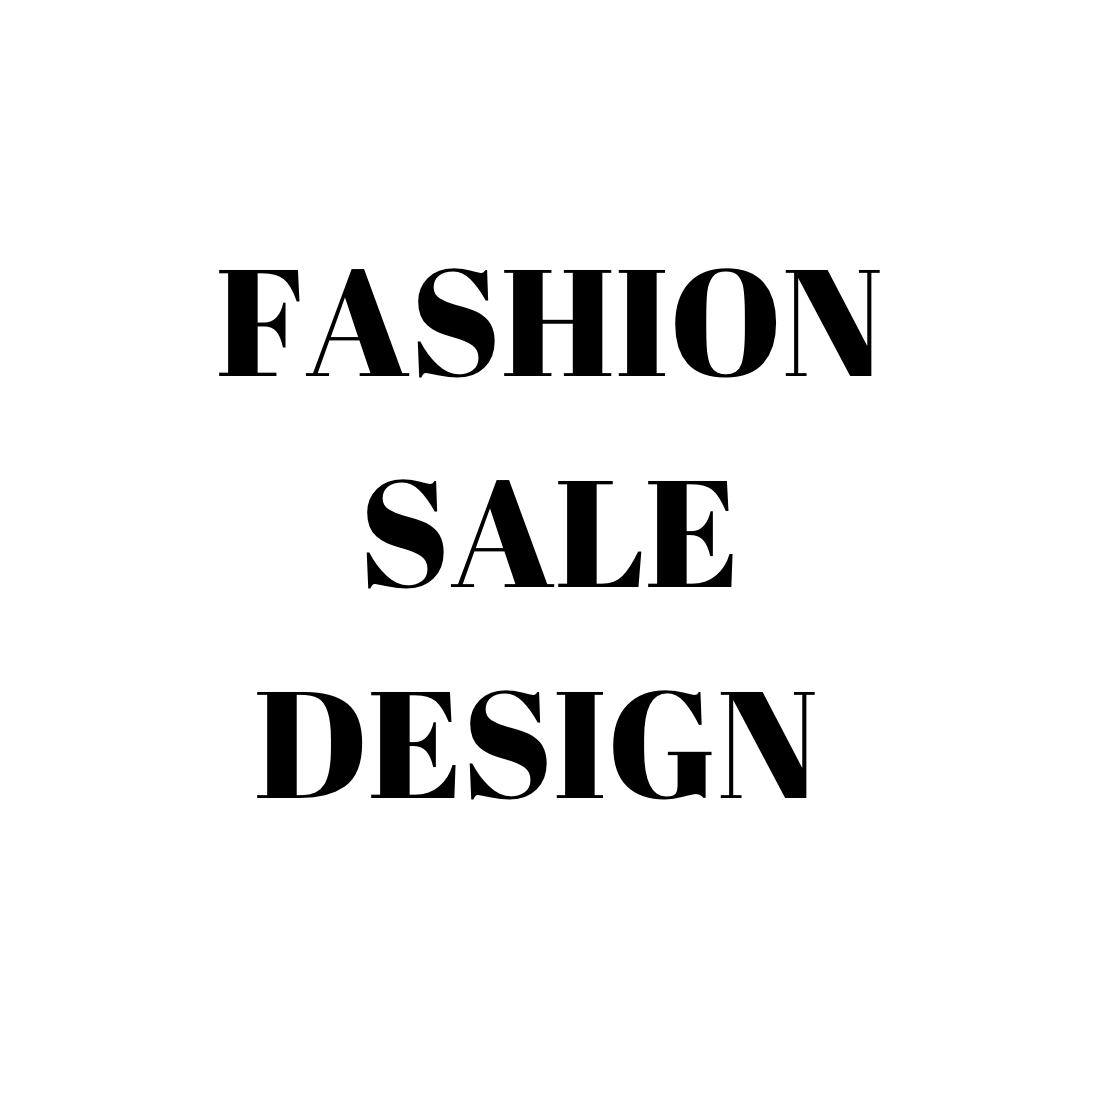 Fashion sale design for social media/ instagram post template ...